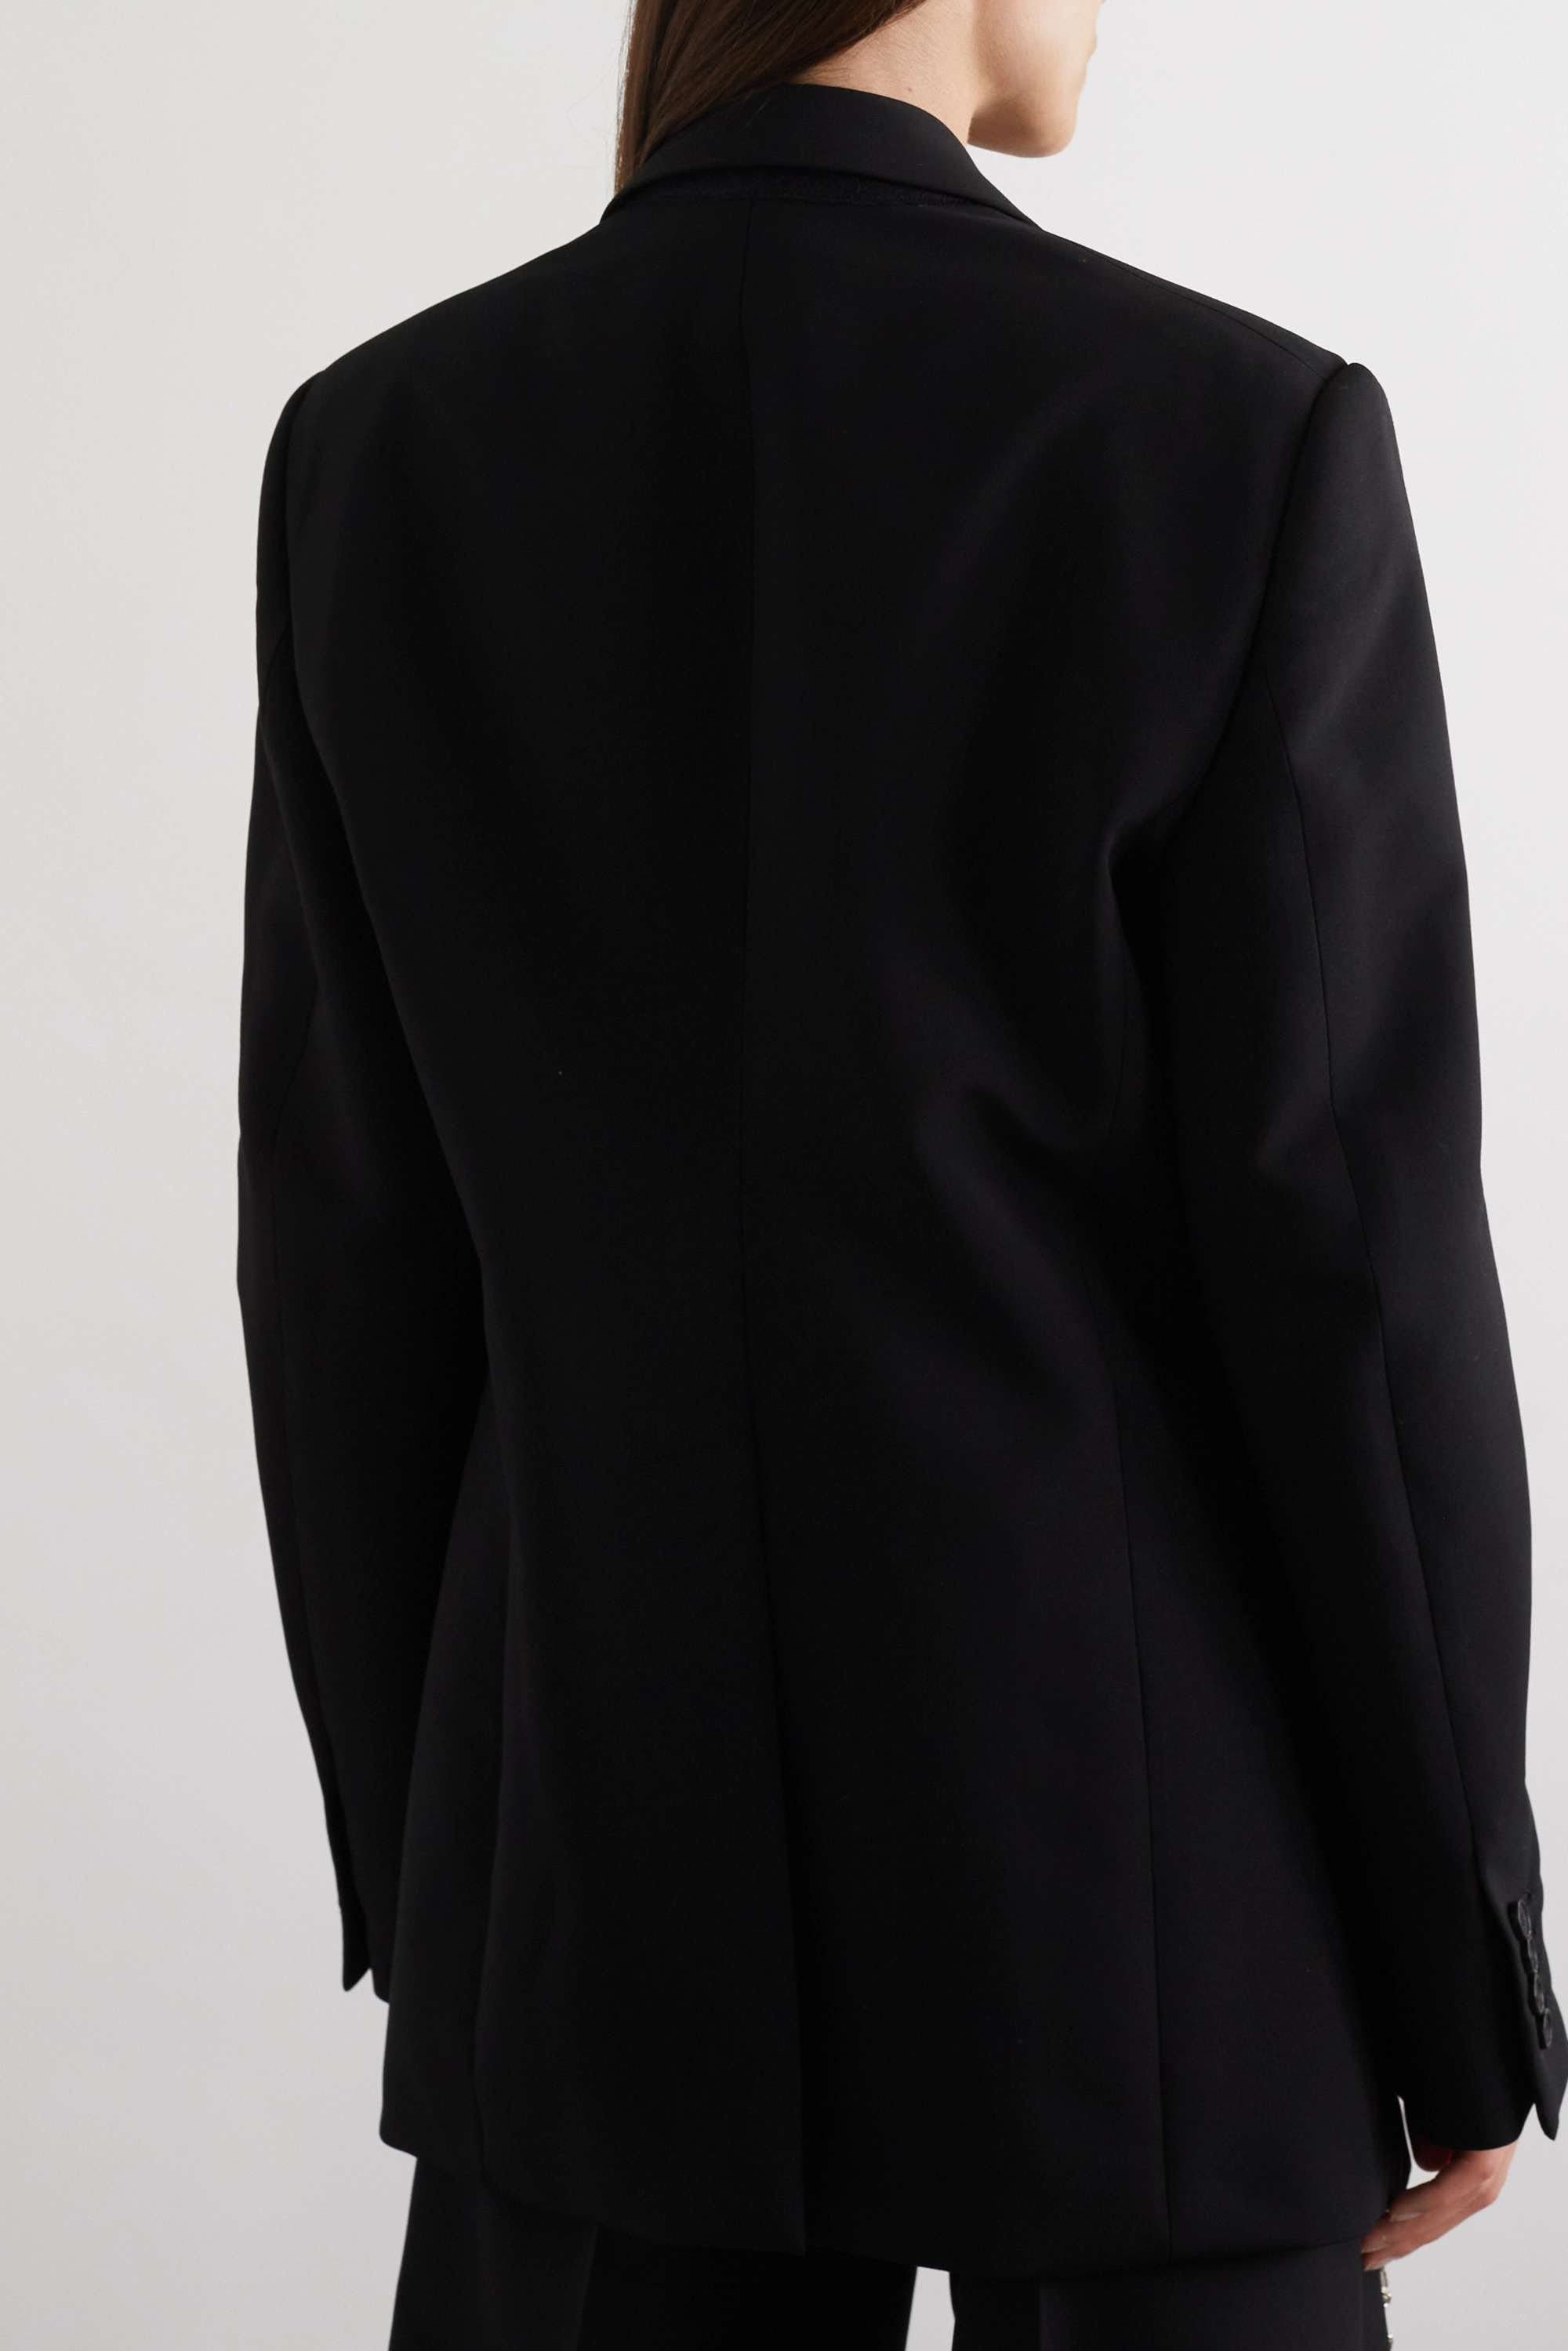 Black Suit Women 2pc Hand Embroidered Peak Lapel Pant Blazer Set Formal ...